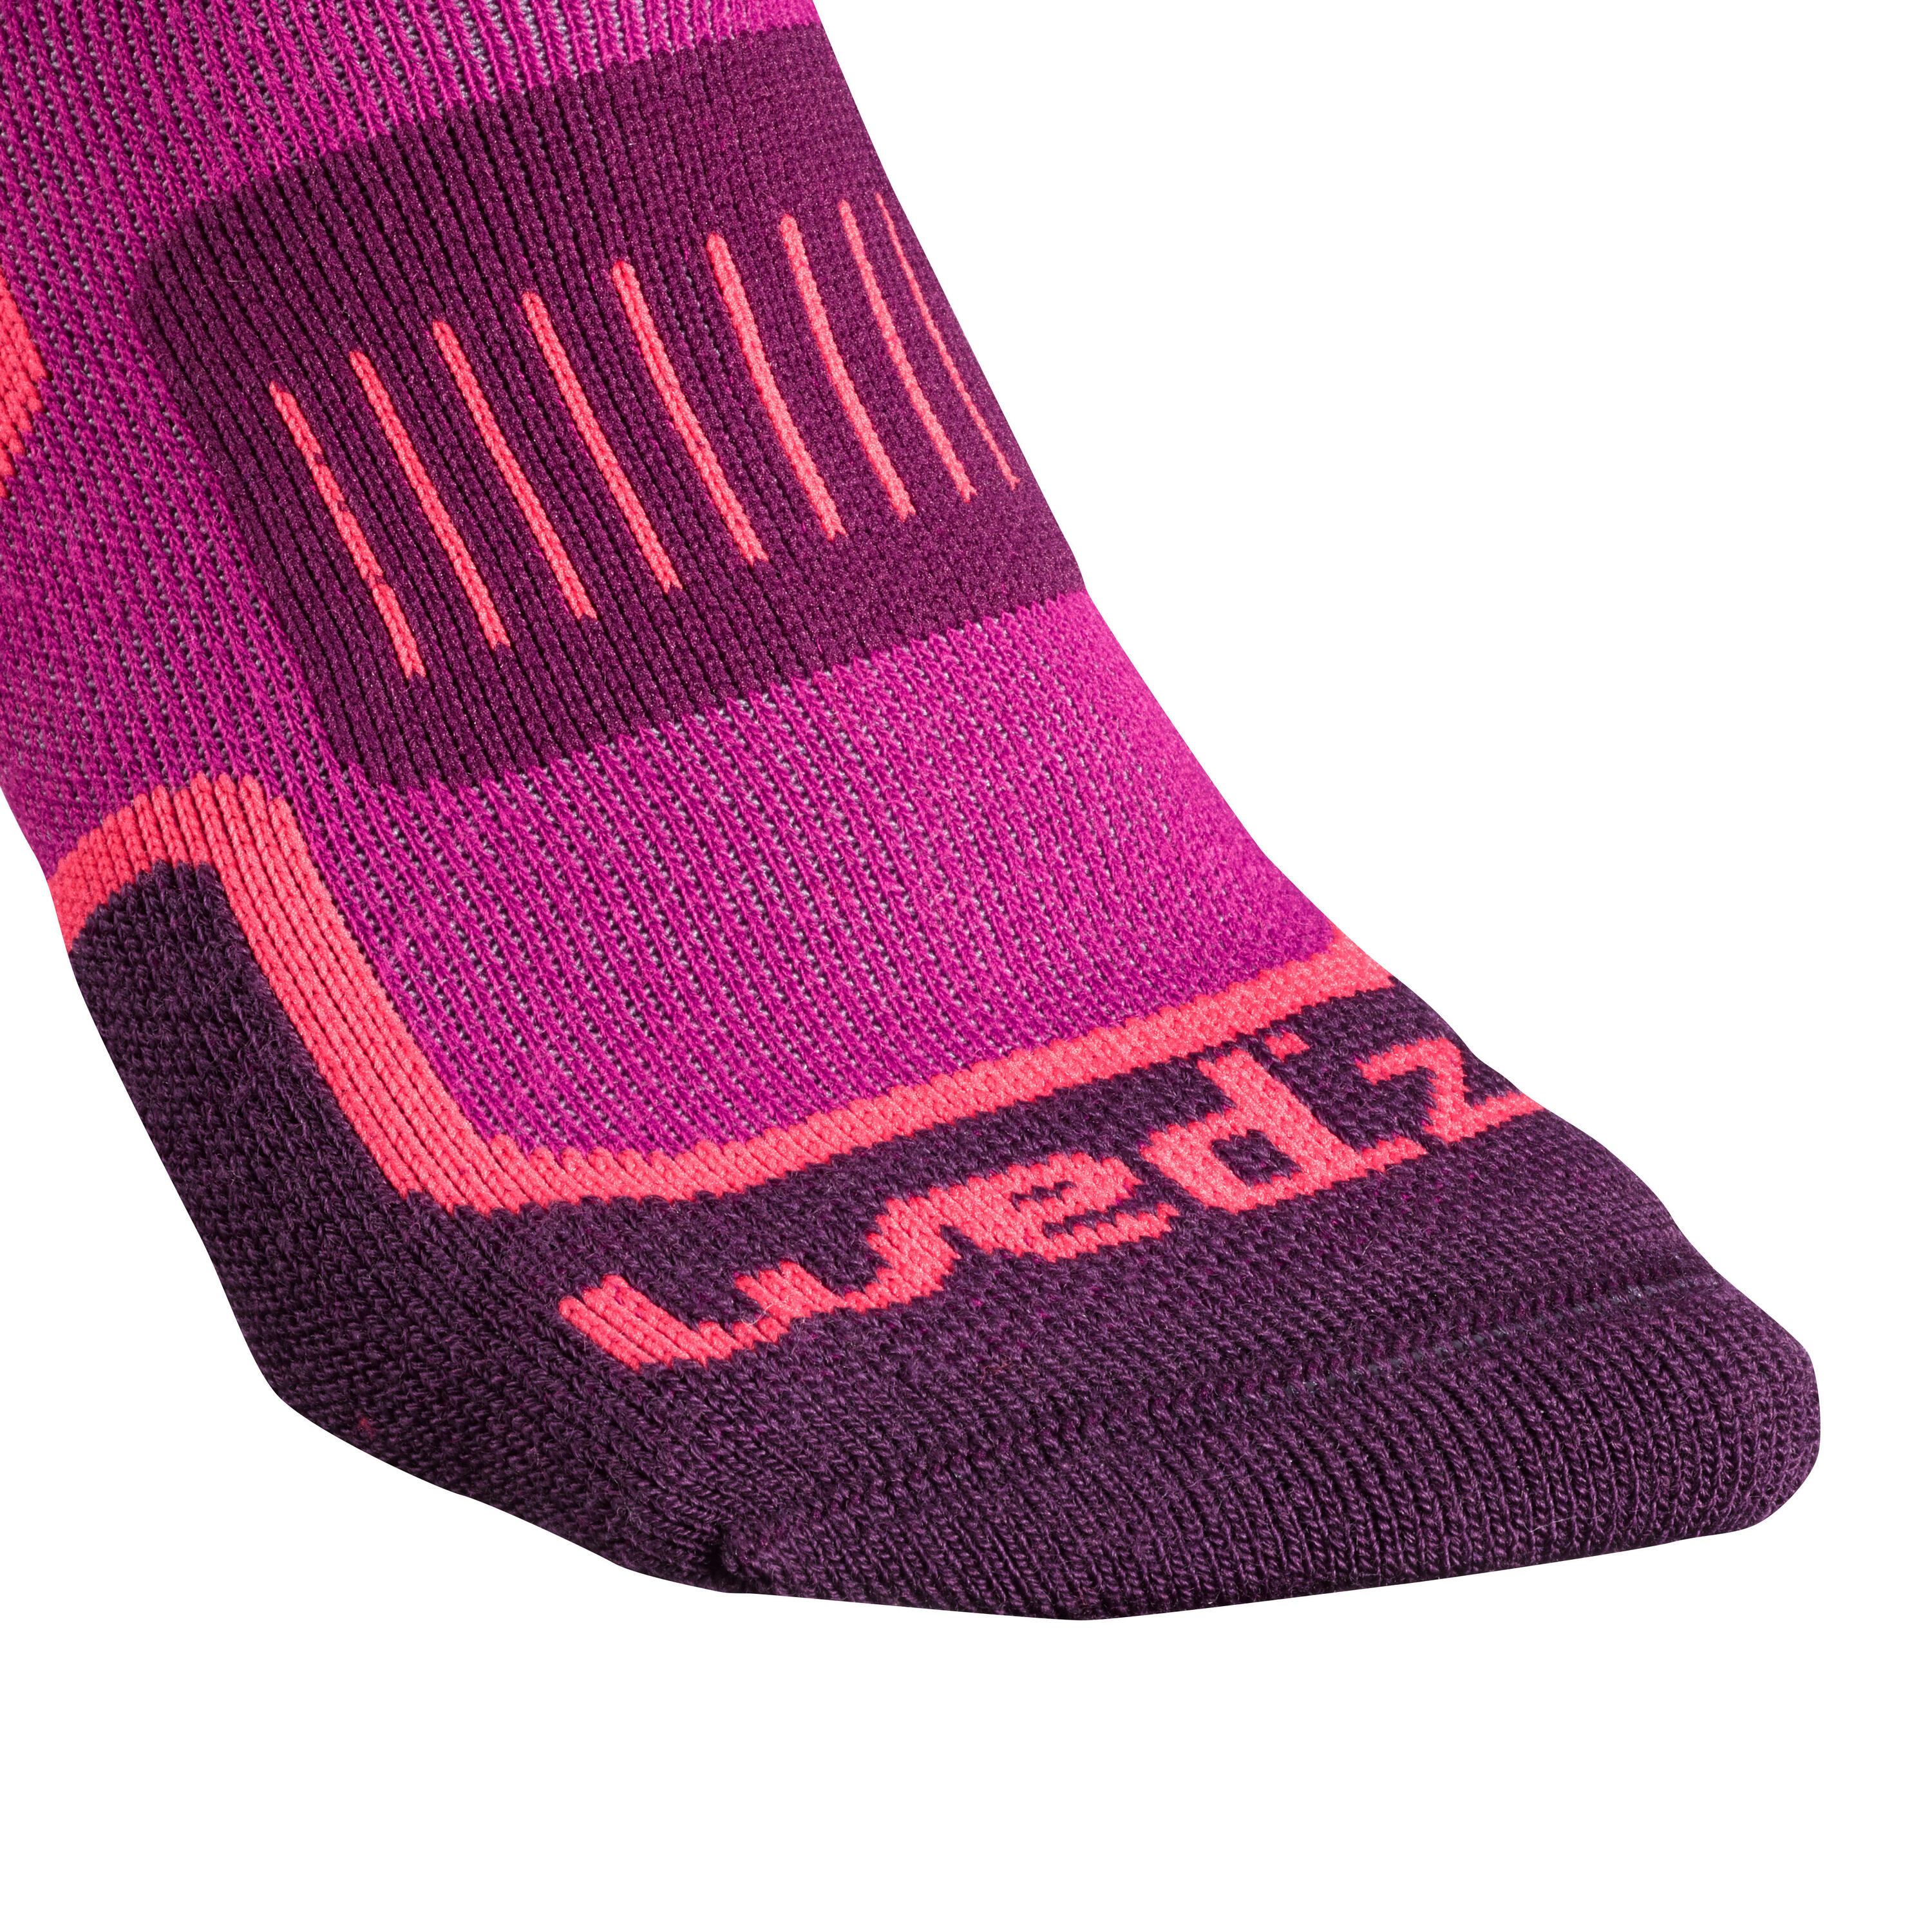 300 Adult Ski Socks - Pink 2/5